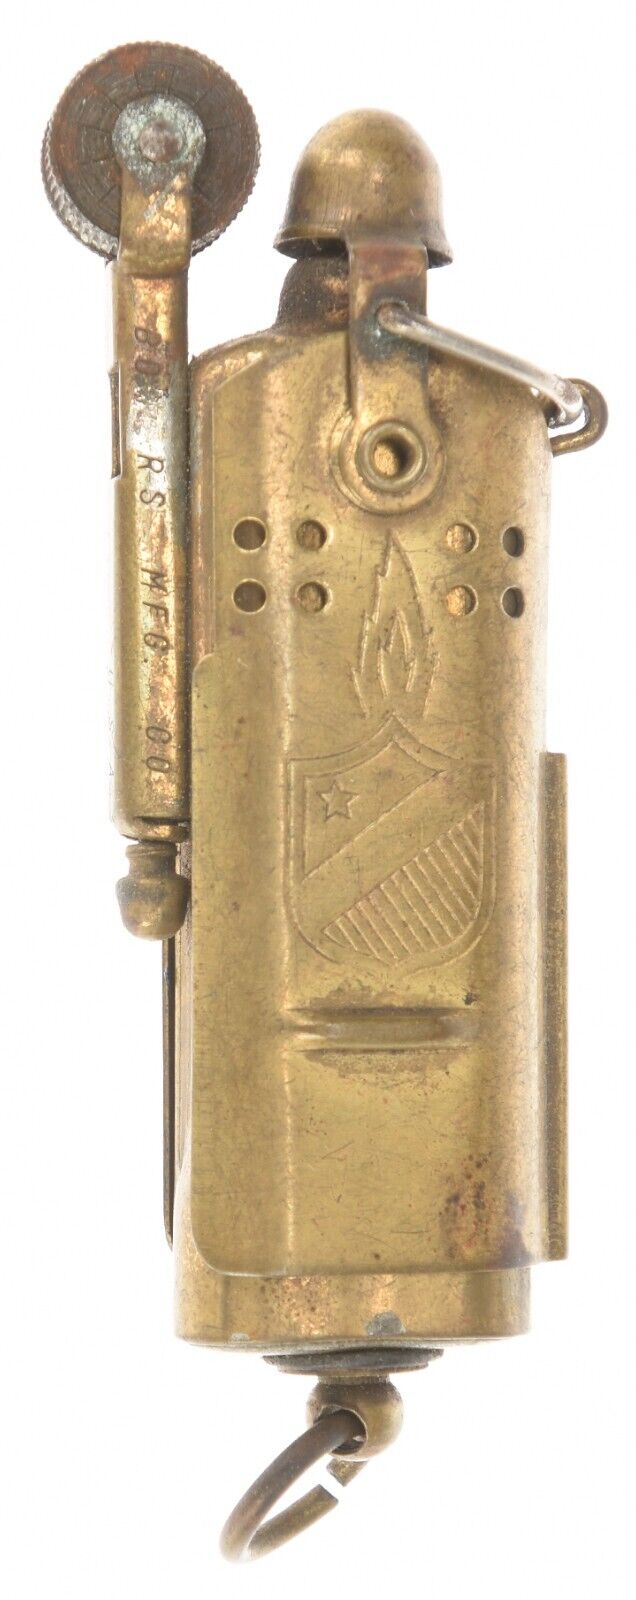 WWII Era Bowers Mfg. Co. Trench Cigarette Lighter, Brass